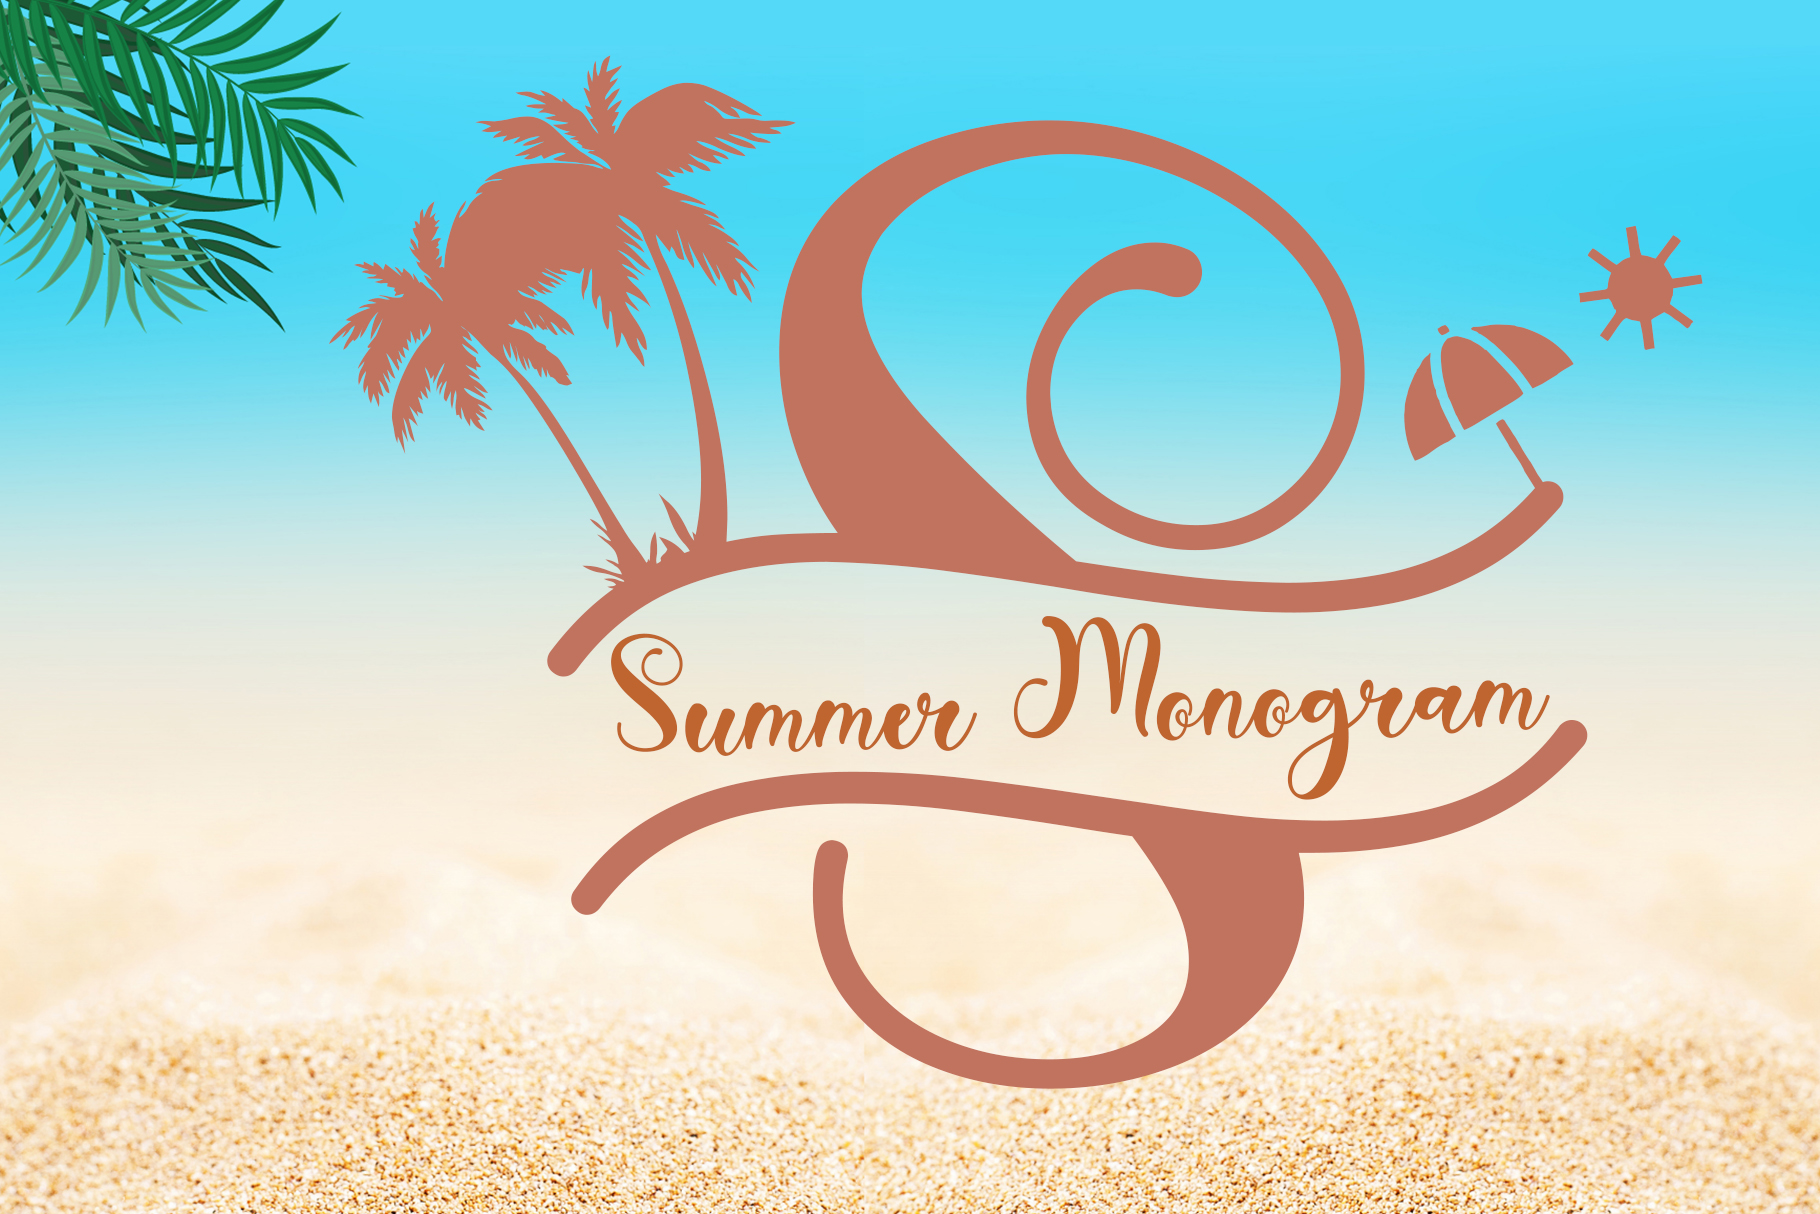 Summer Monogram - Personal Use